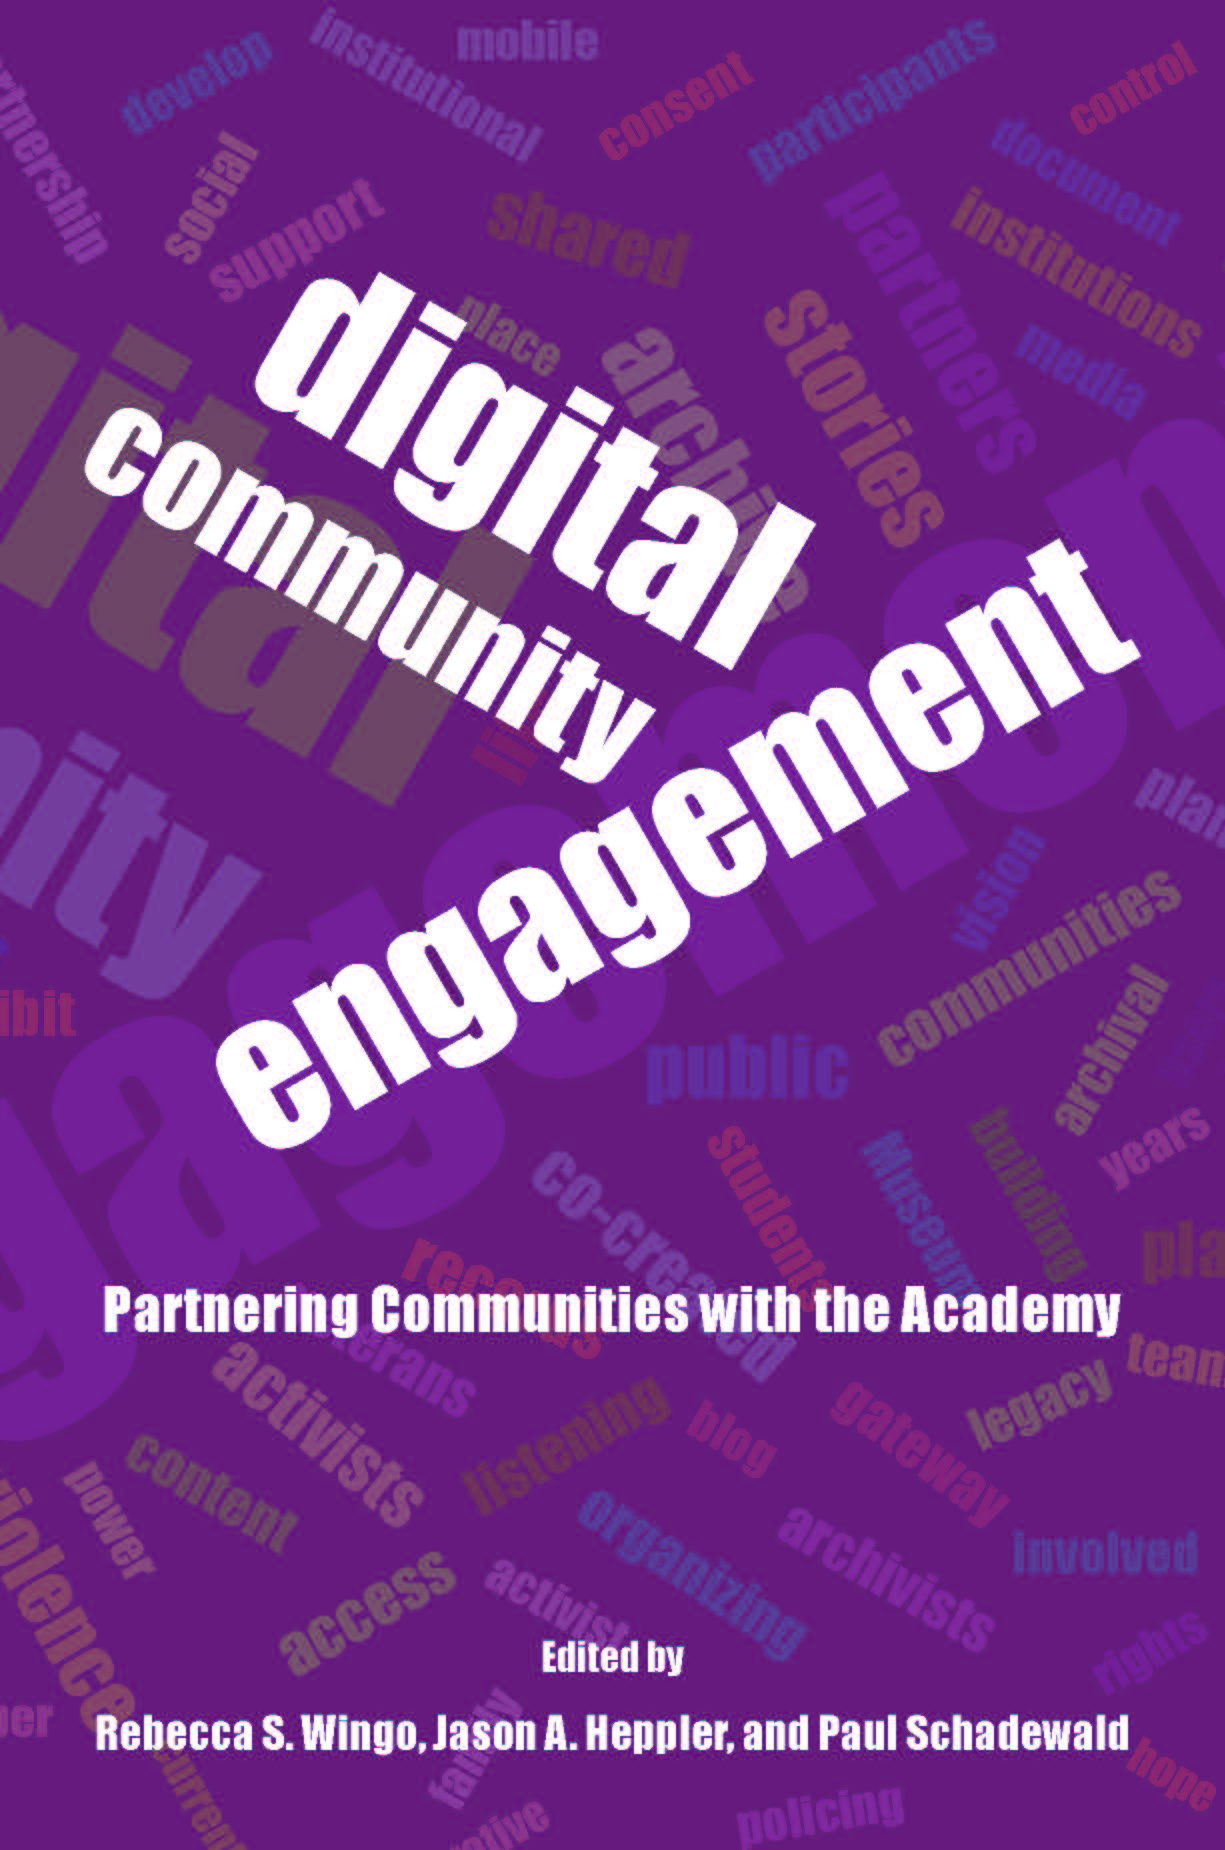 digital community engagement book cover